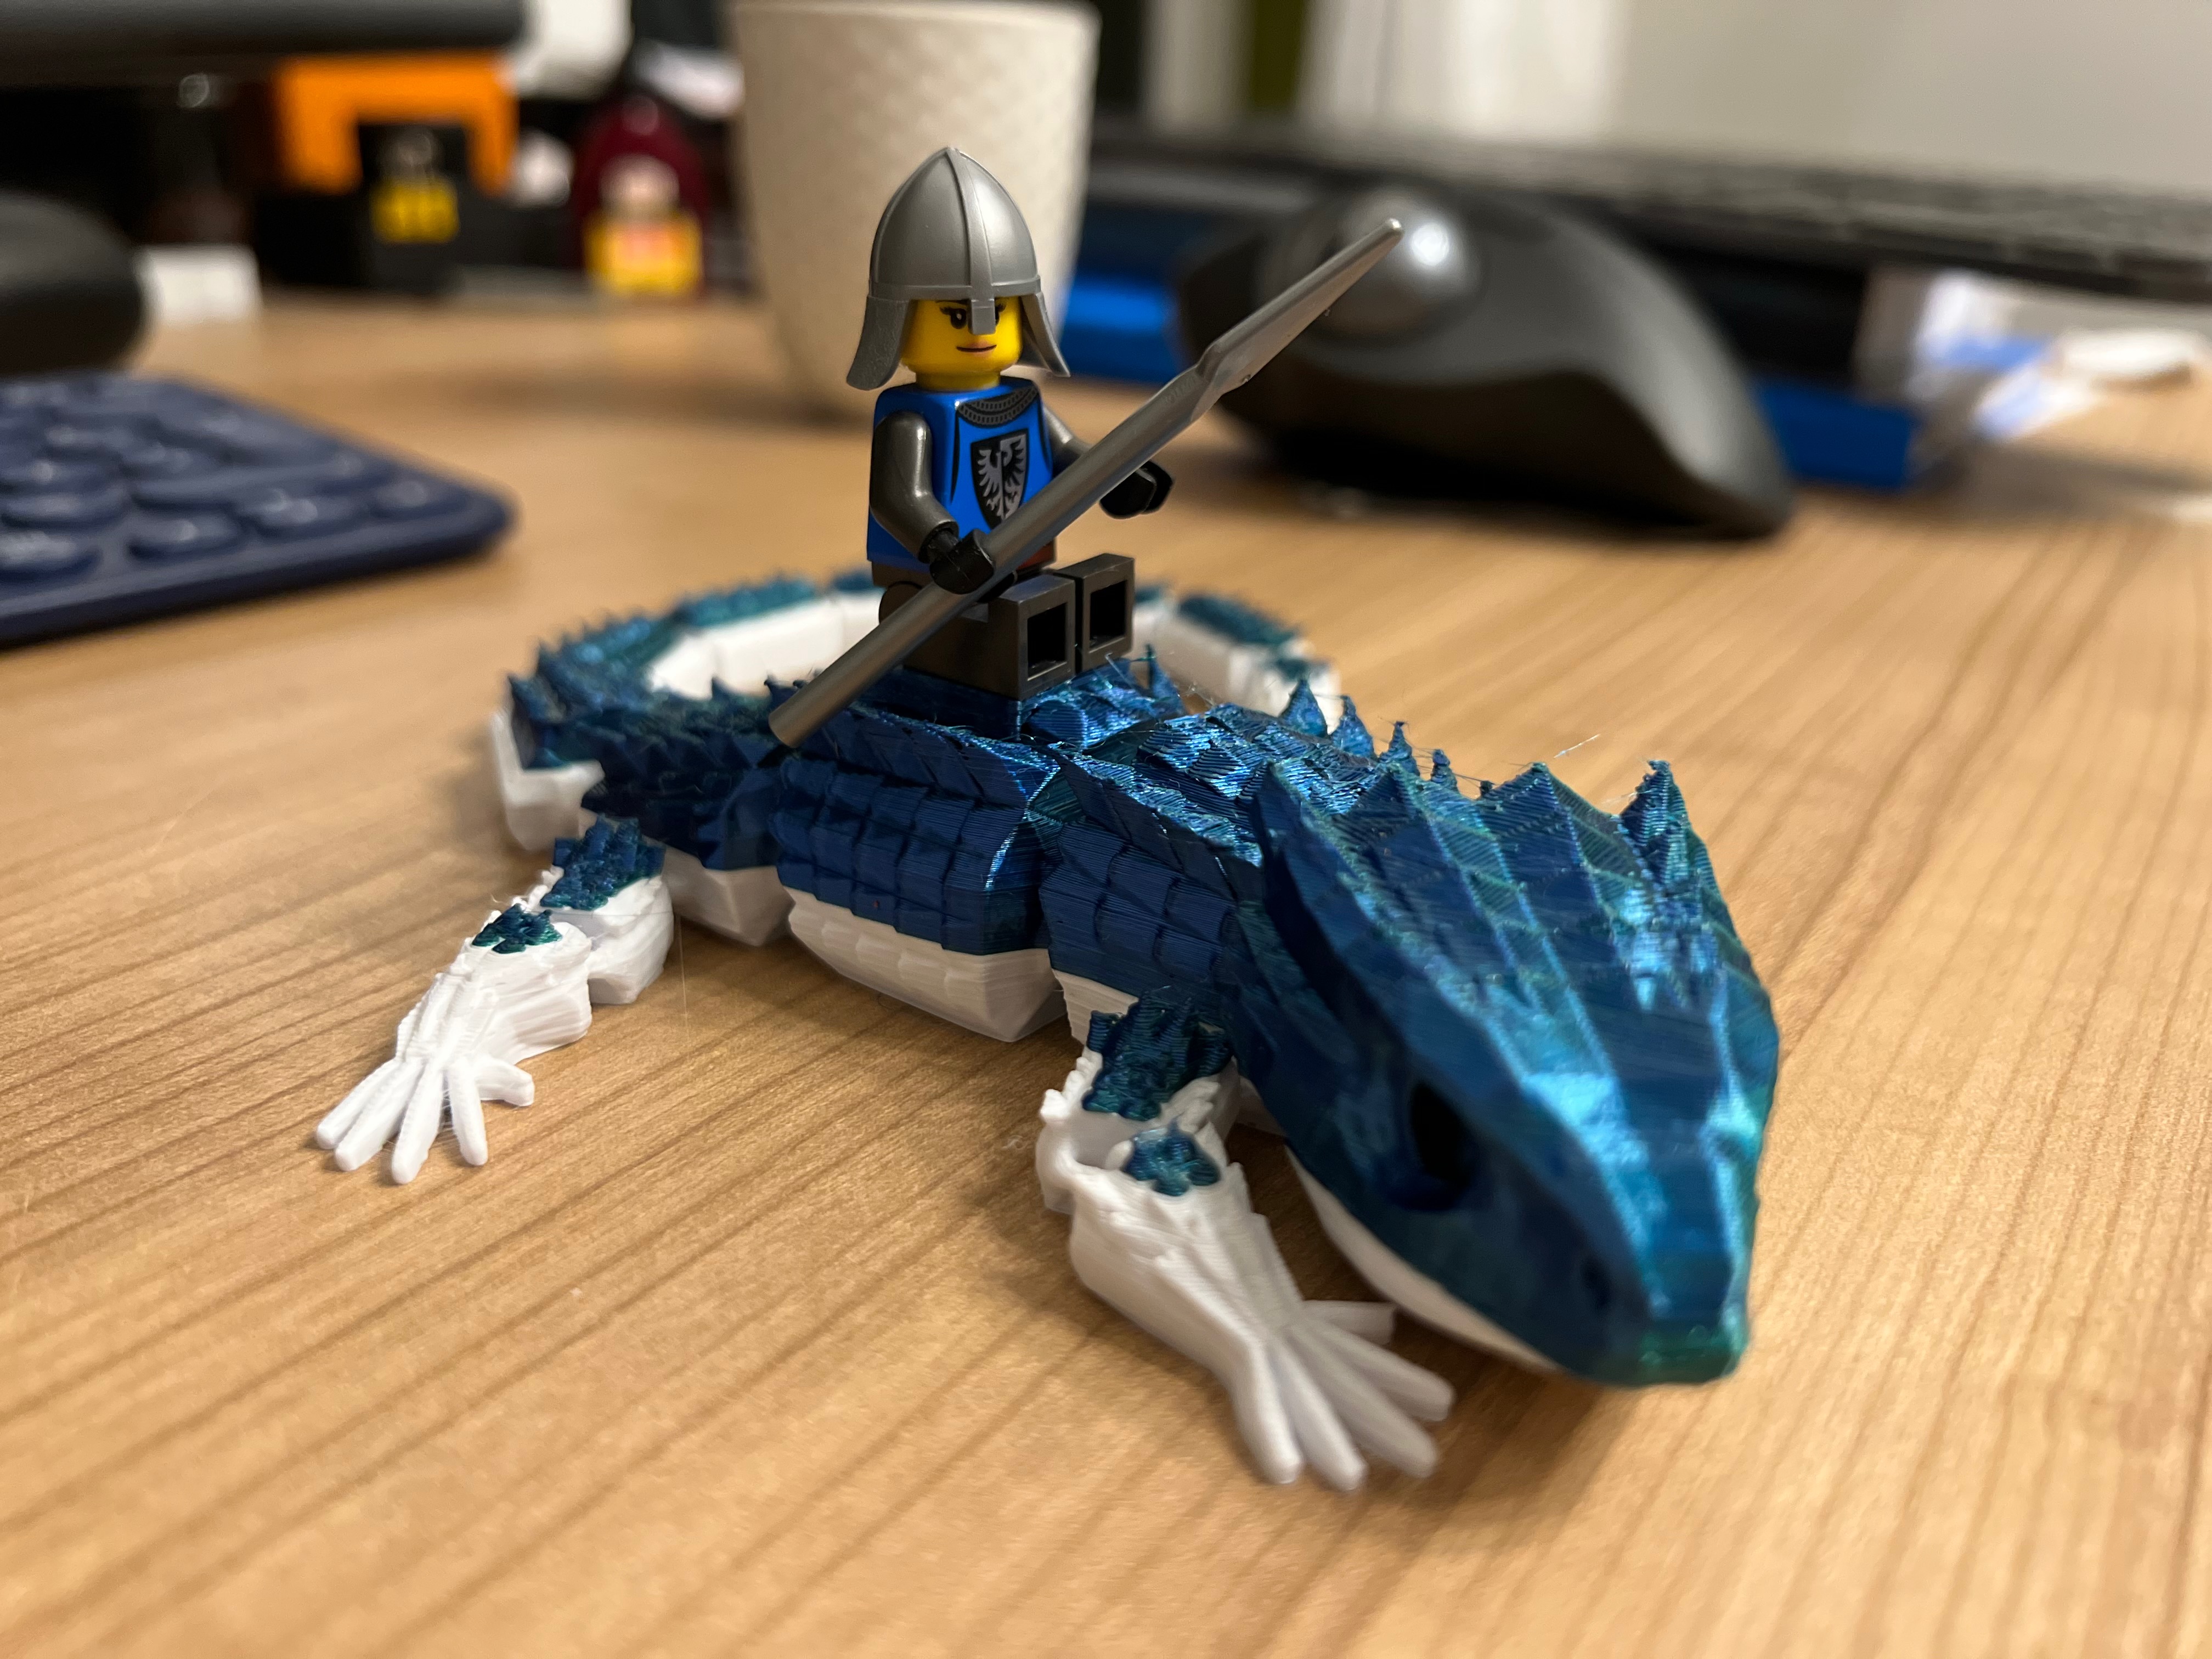 Onward mighty Lego Lizard!